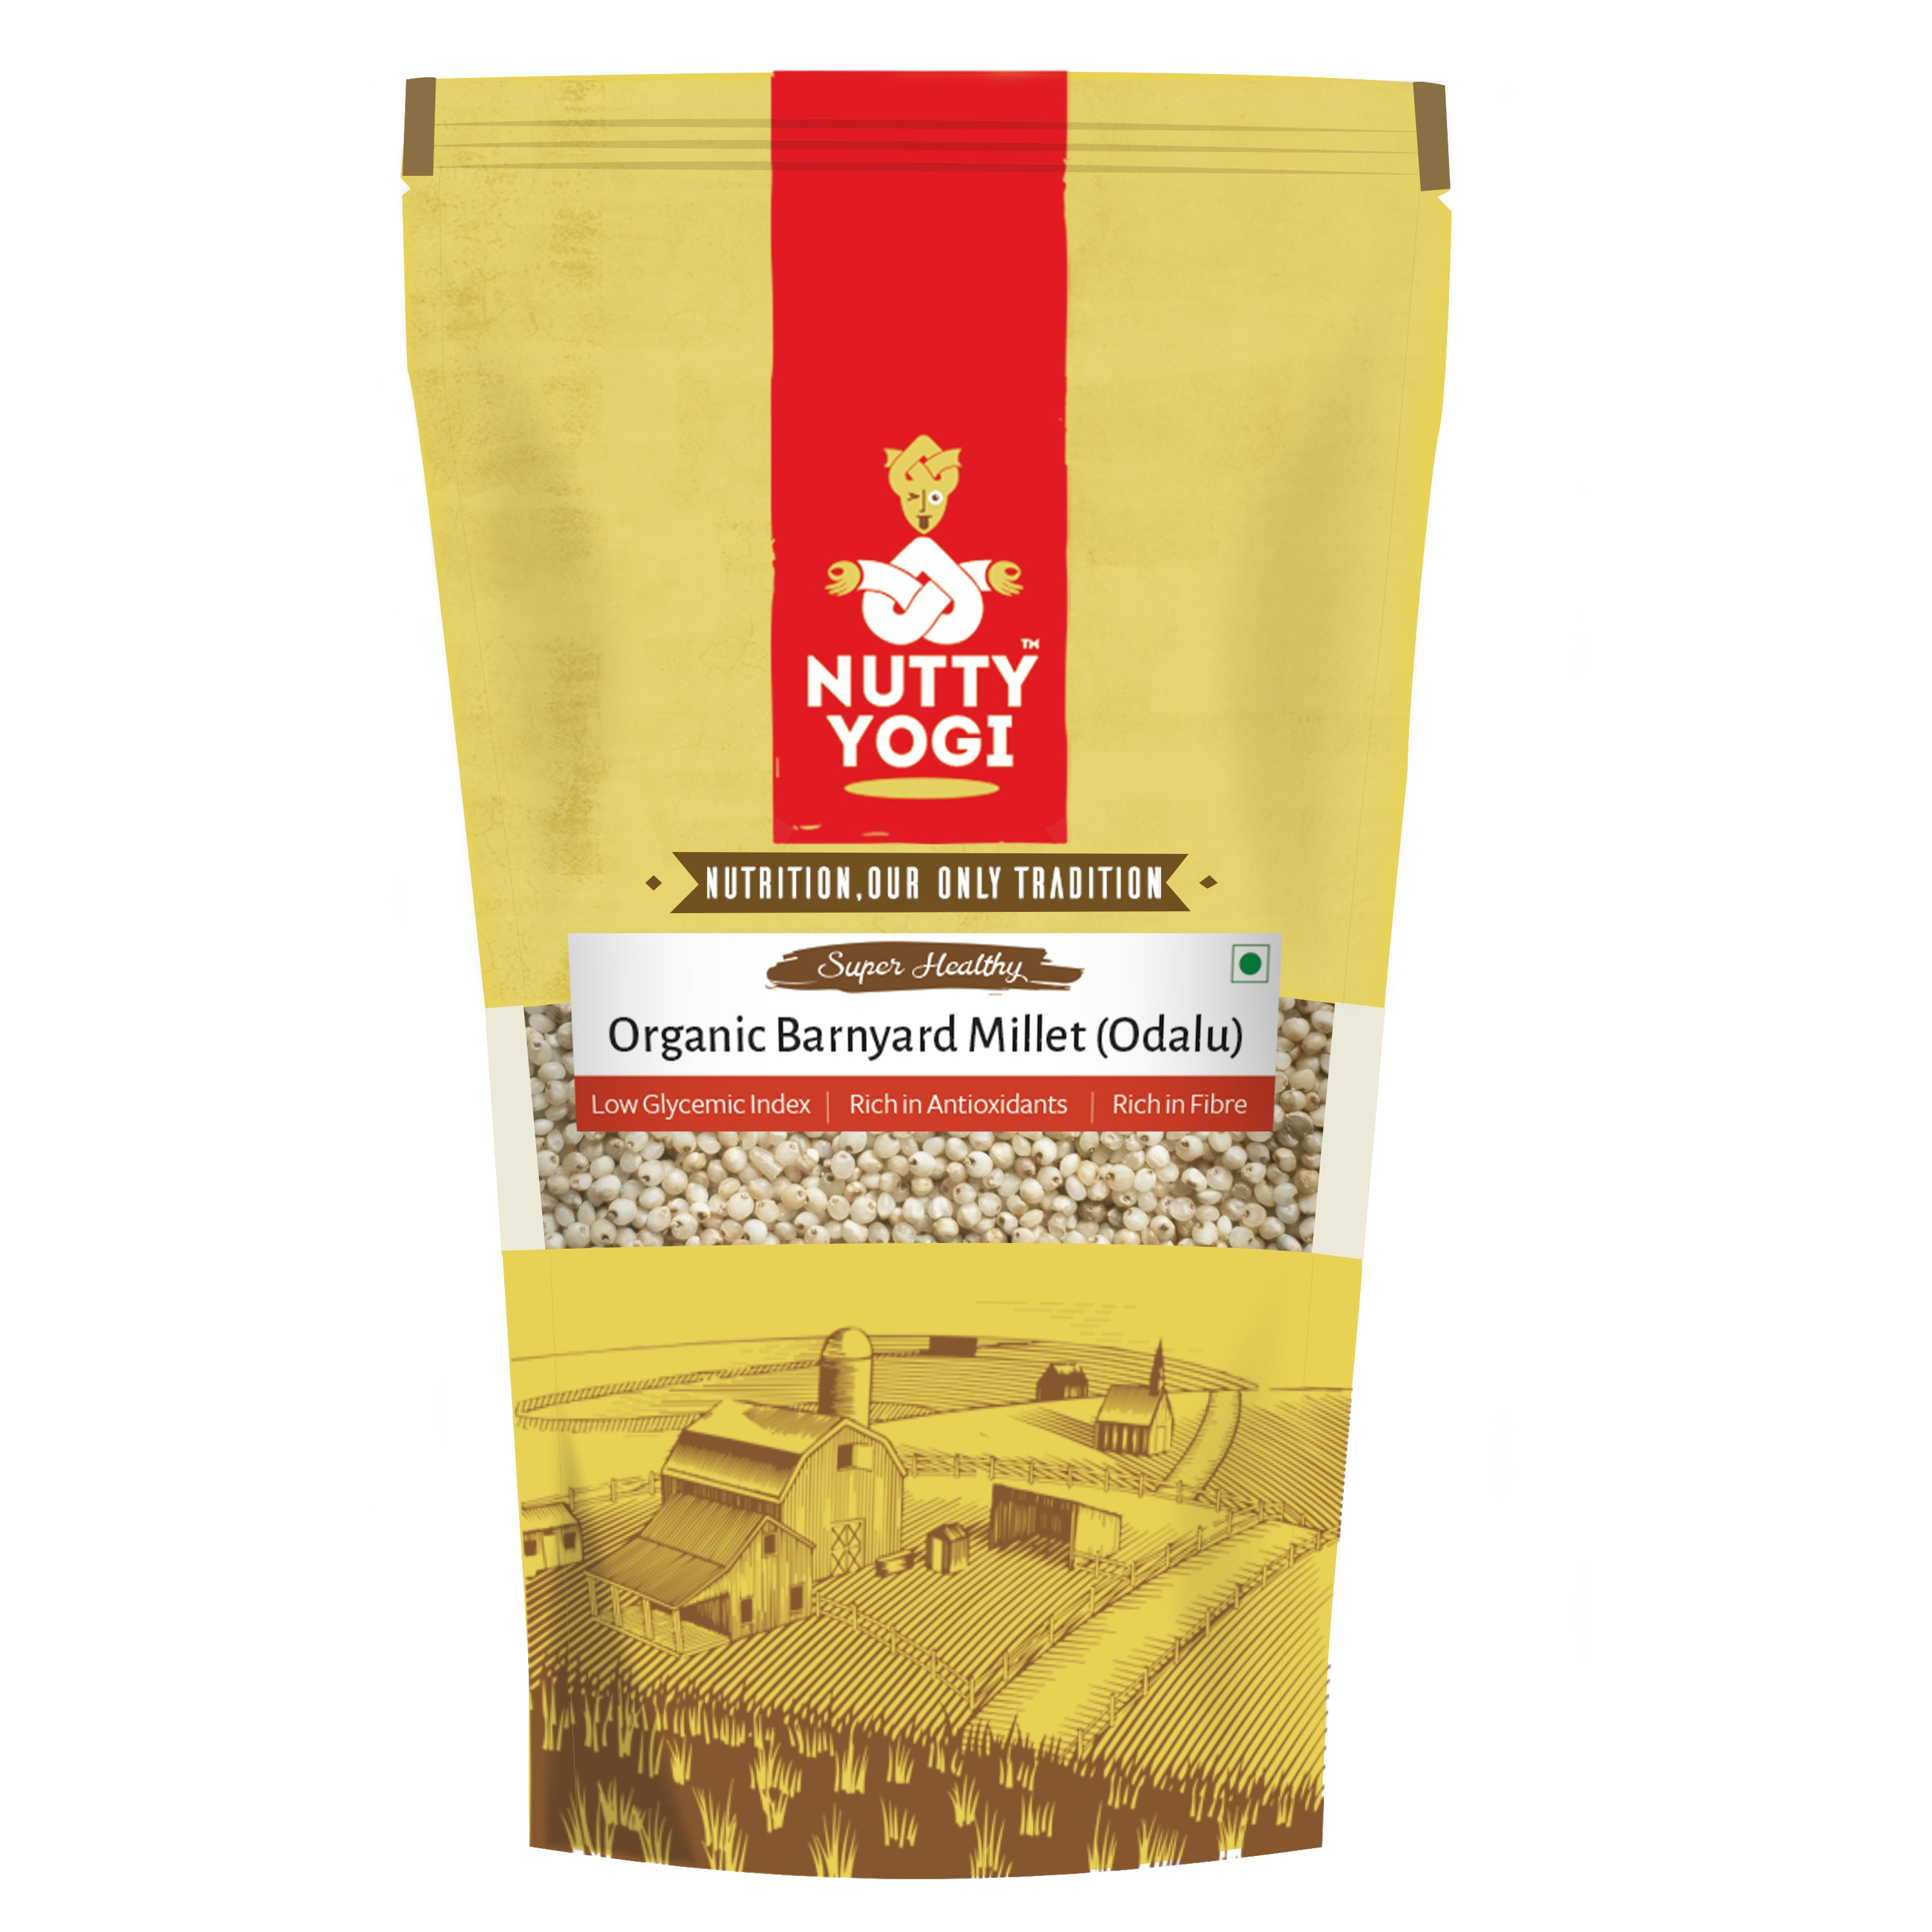 Nutty Yogi Organic Barnyard Millet / Samak ke Chawal